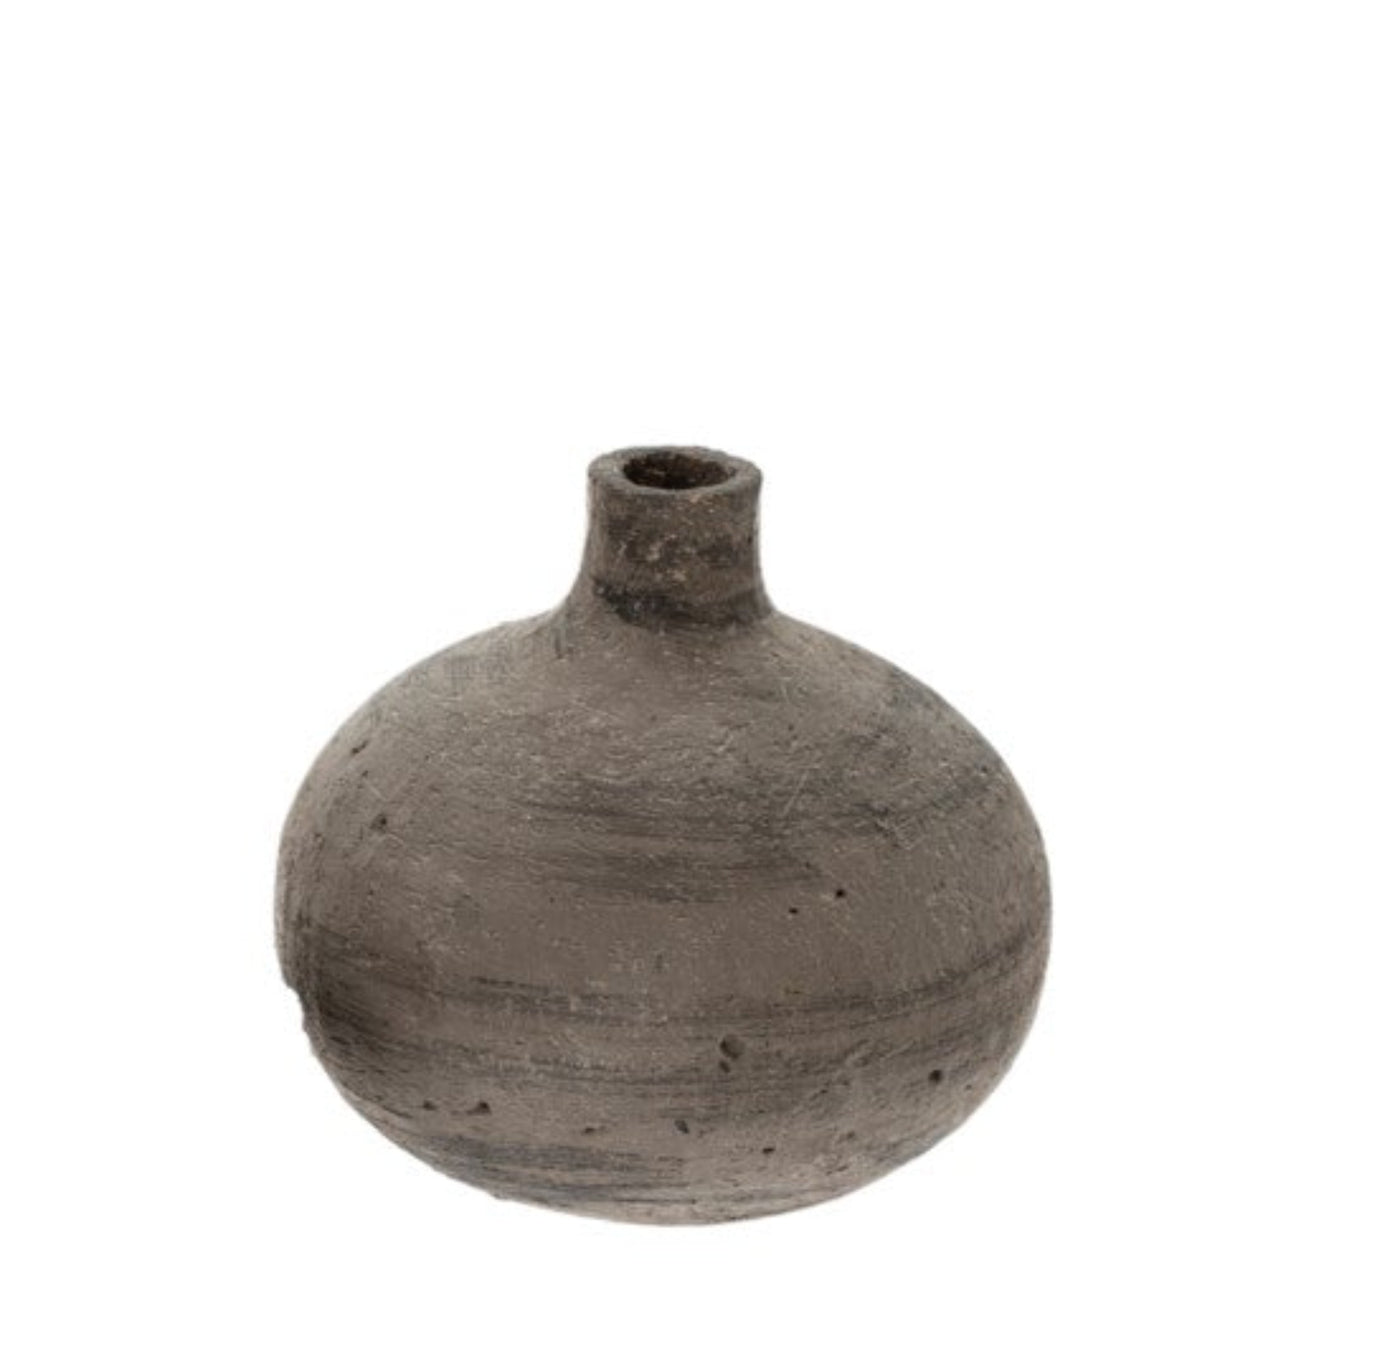 Bosco Vase: Earthy, organic stoneware vase for your home. SKU 1-2679